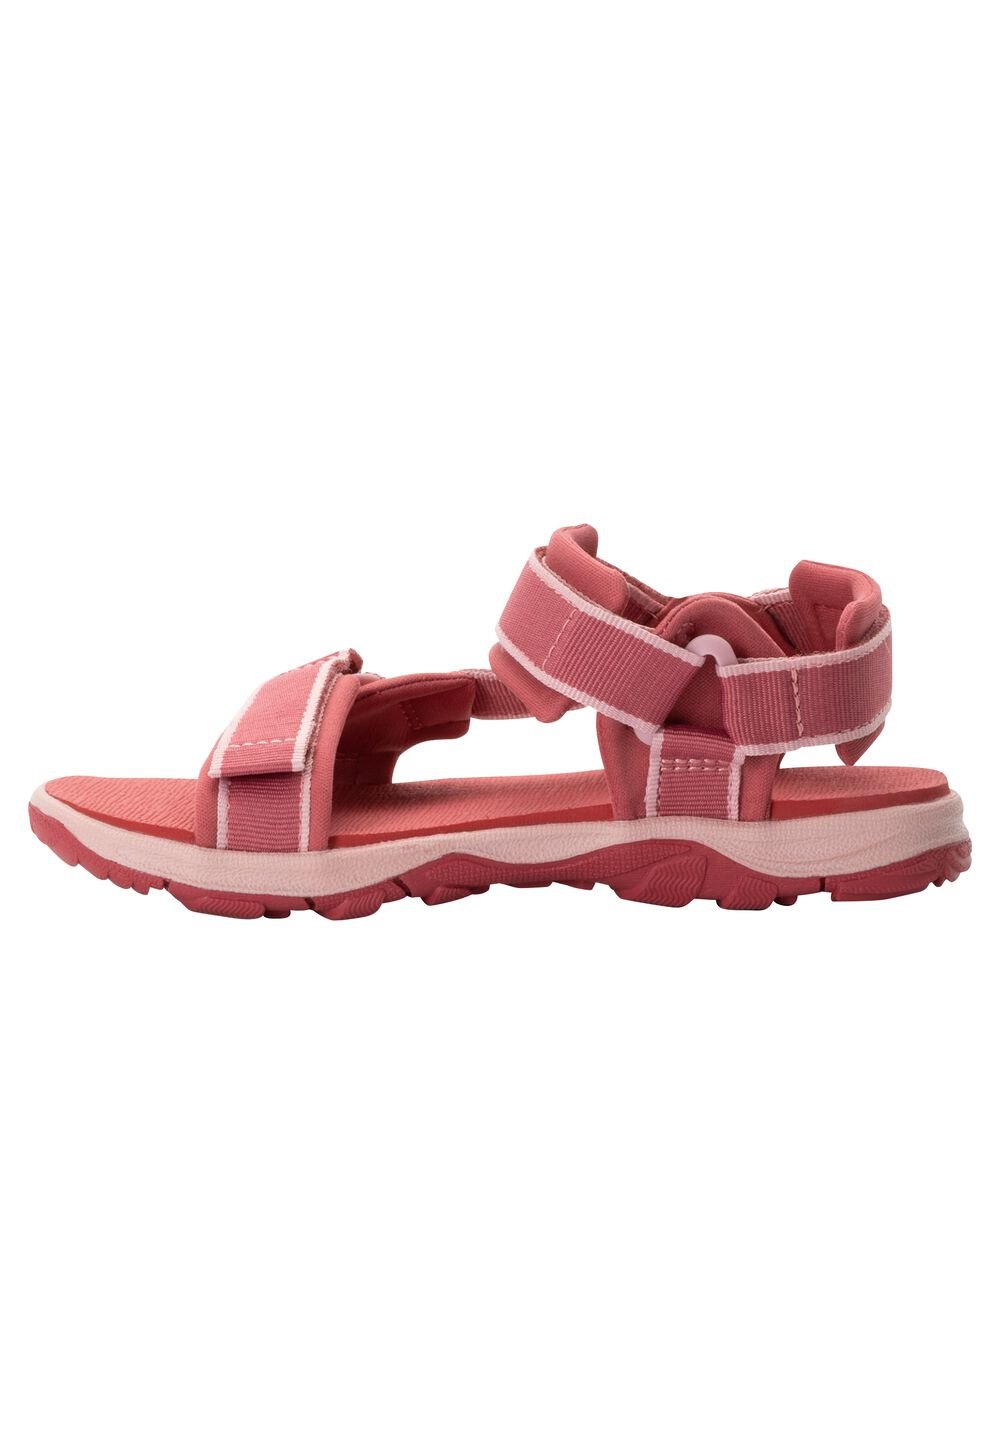 Jack Wolfskin Seven Seas 3 Kids Kinderen sandalen 39 soft pink soft pink